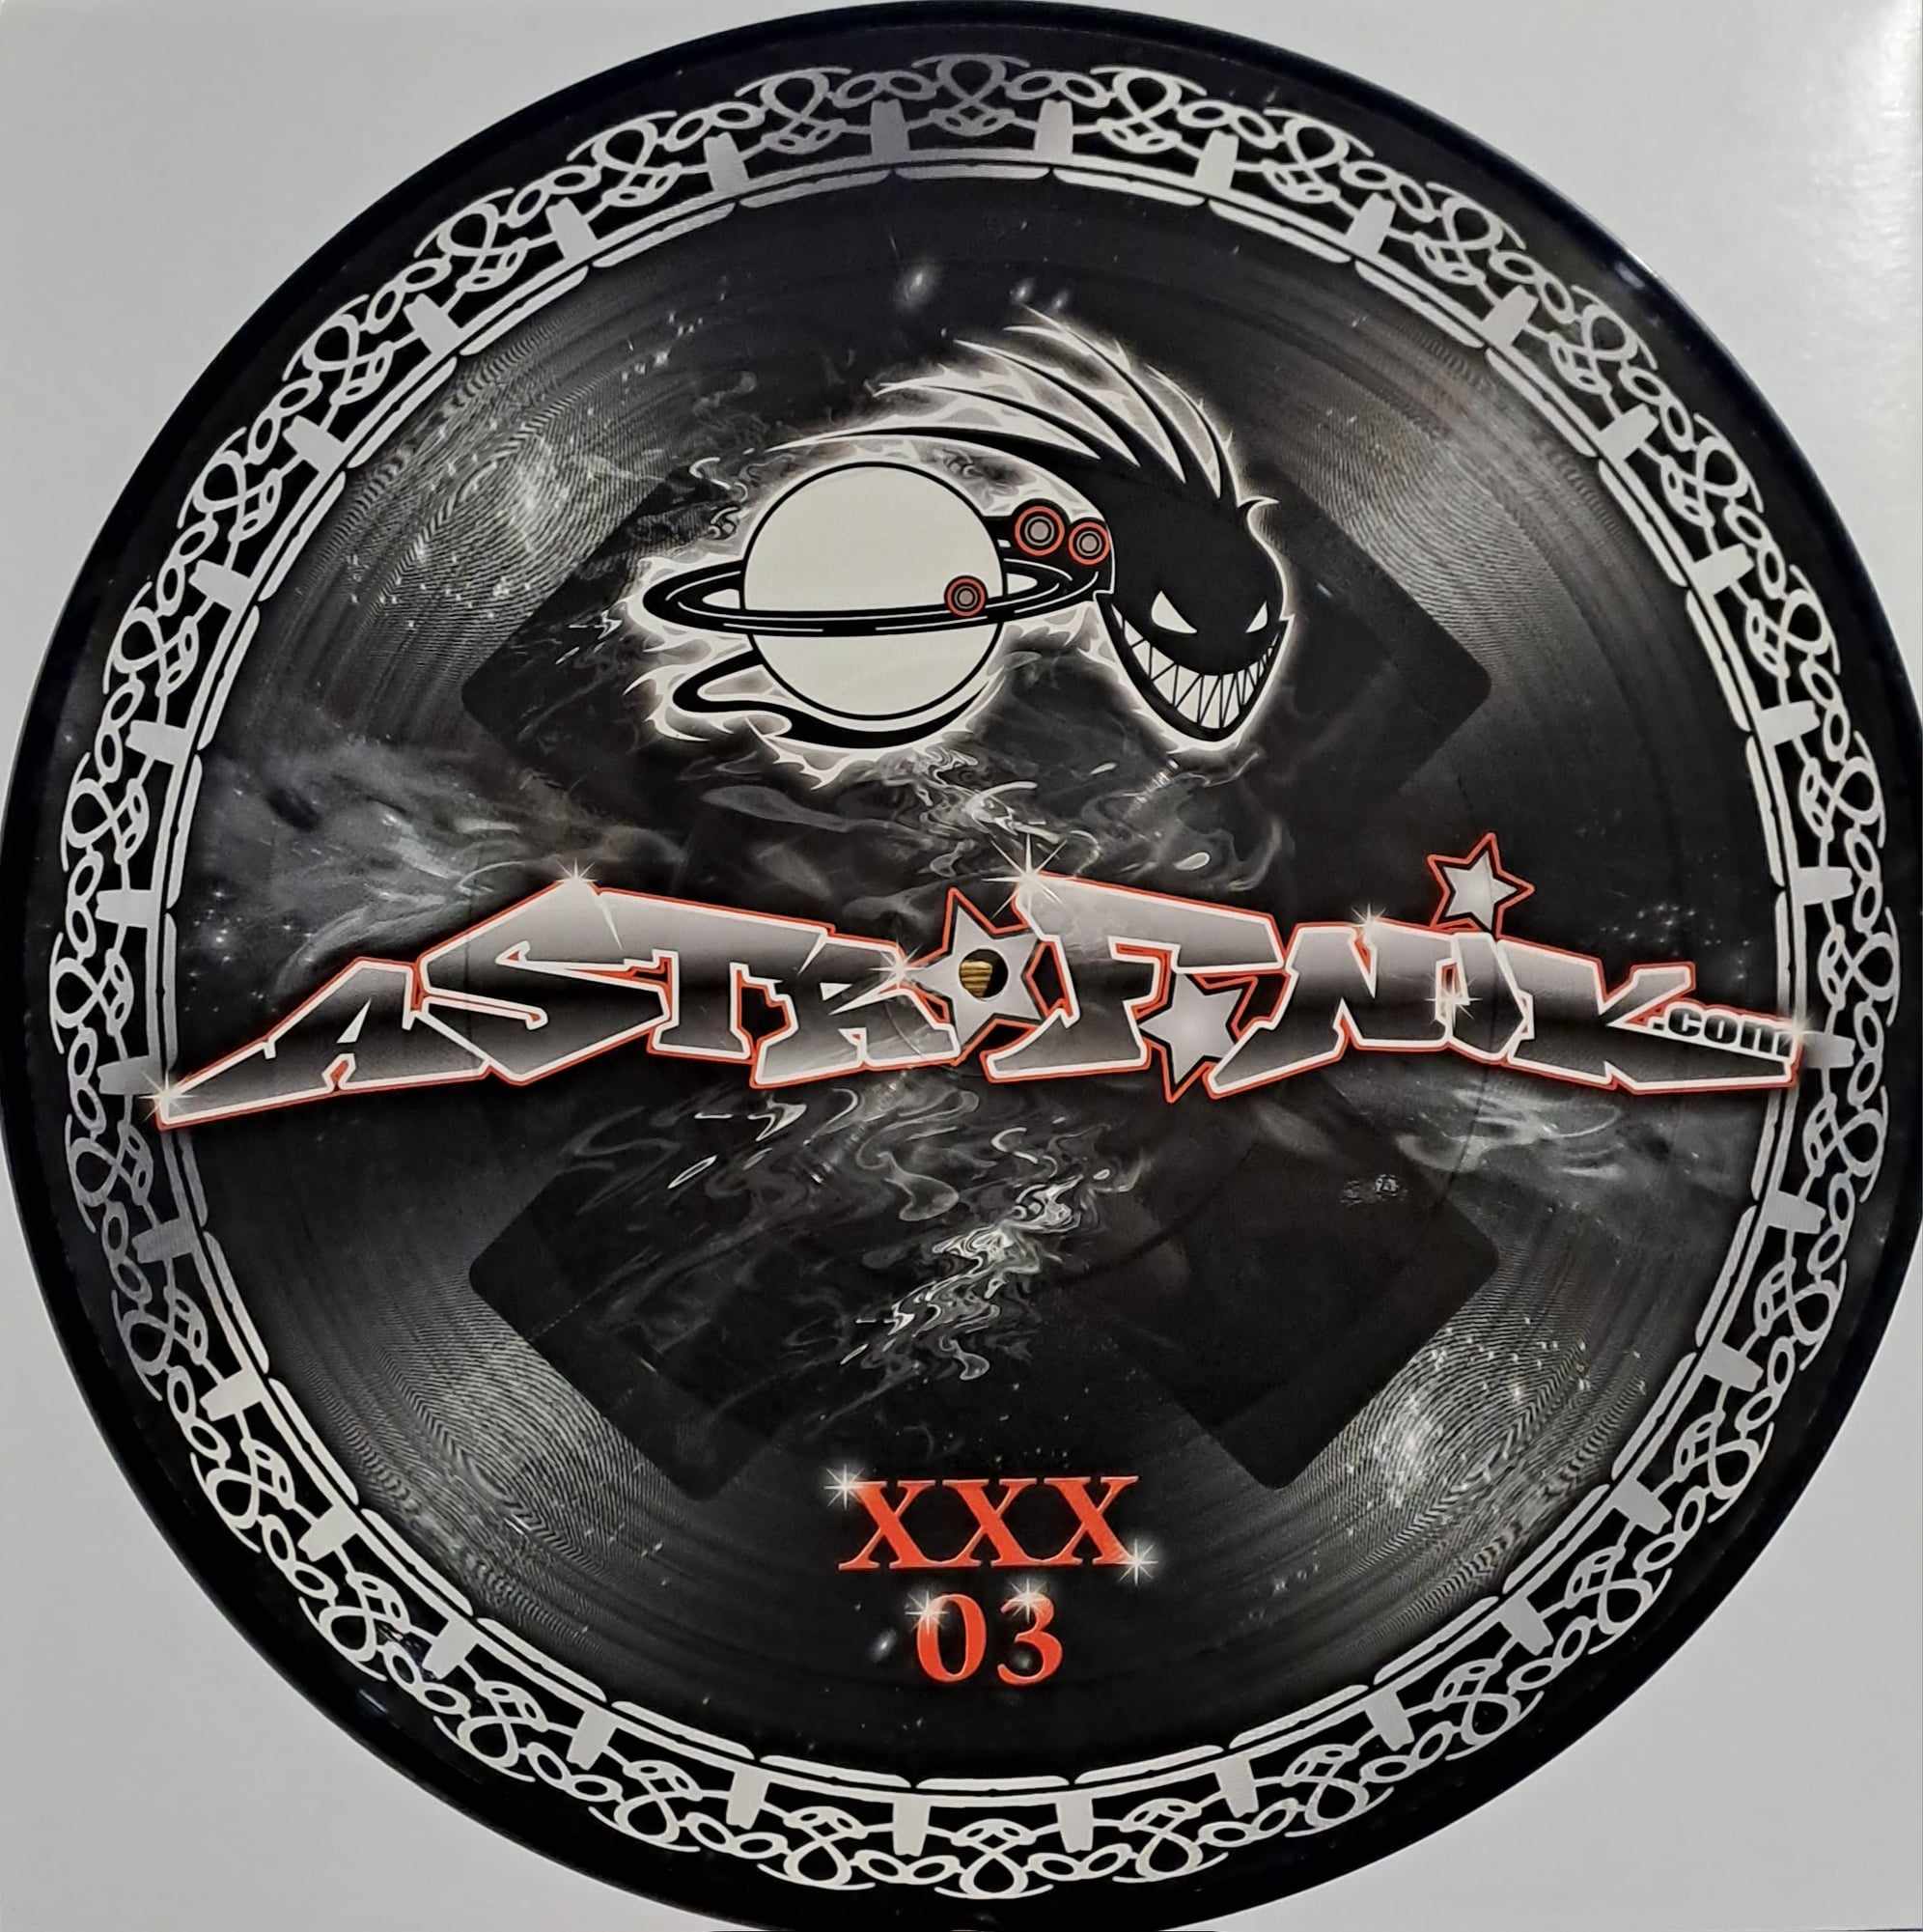 Astrofonik XXX 03 (picture) - vinyle freetekno